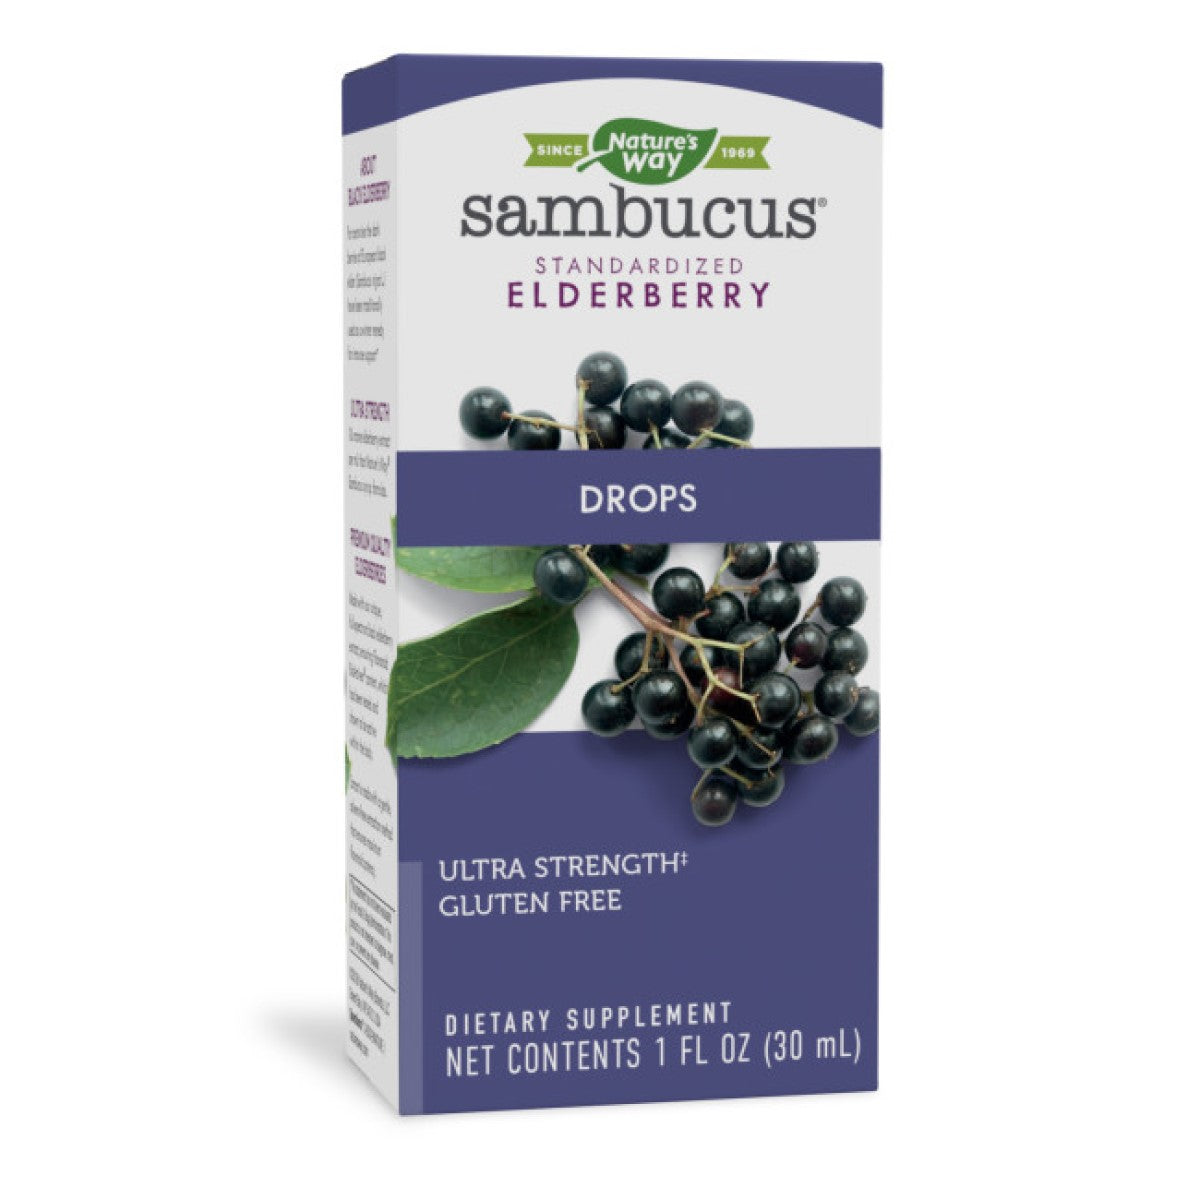 Primary image of Sambucus Drops - Elderberry